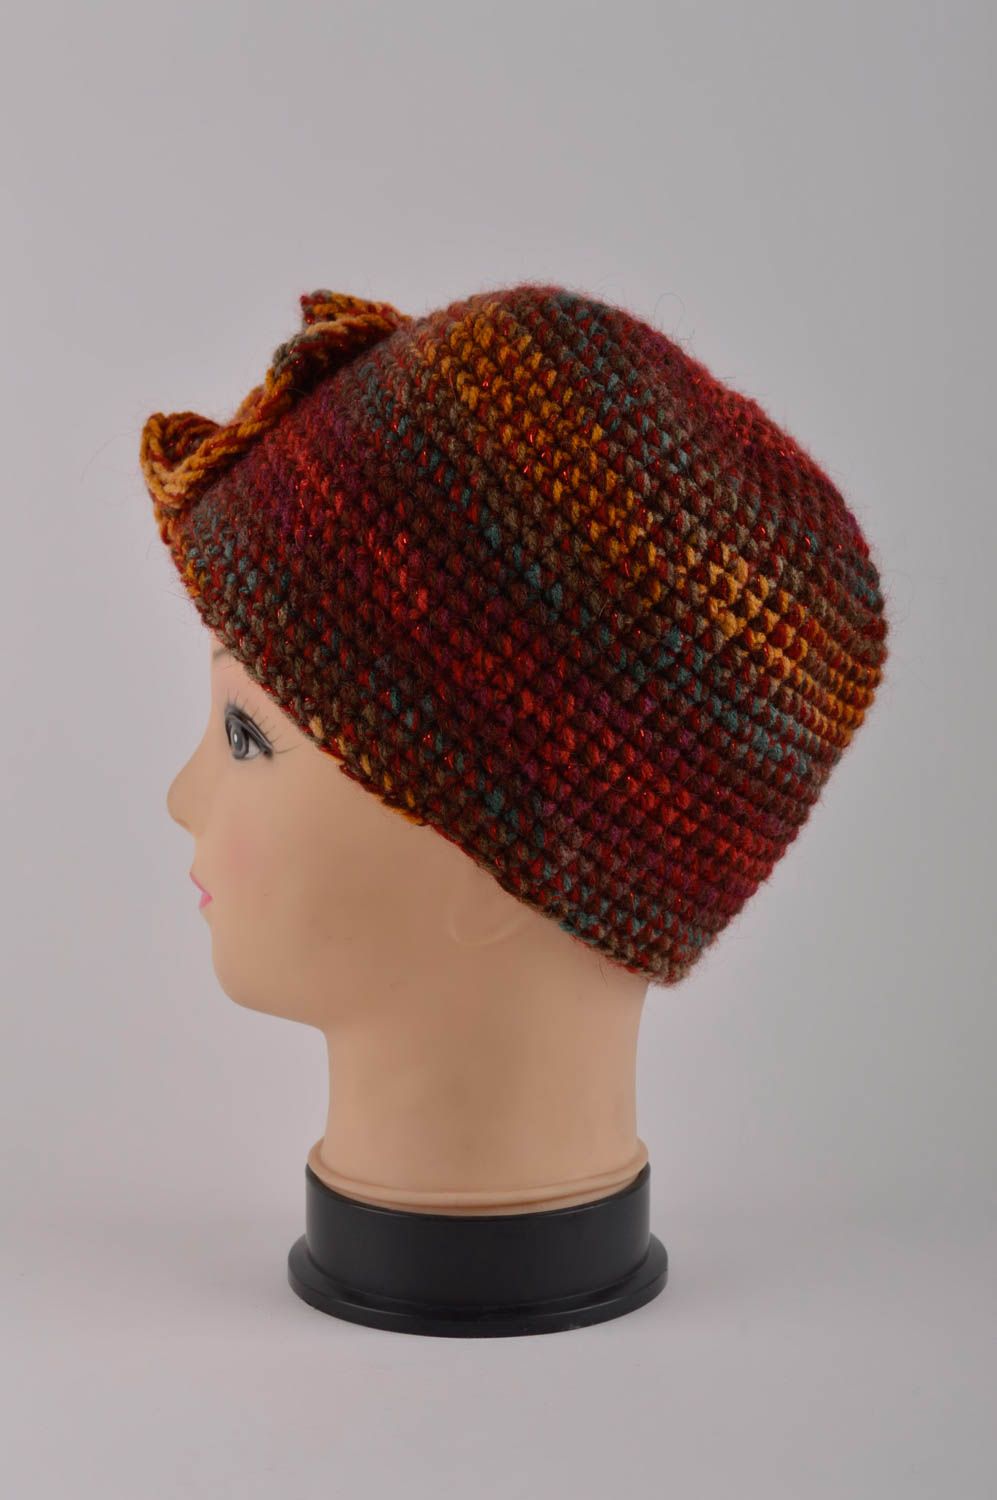 Handmade winter hat crochet hat for women ladies hat designer accessories  photo 4